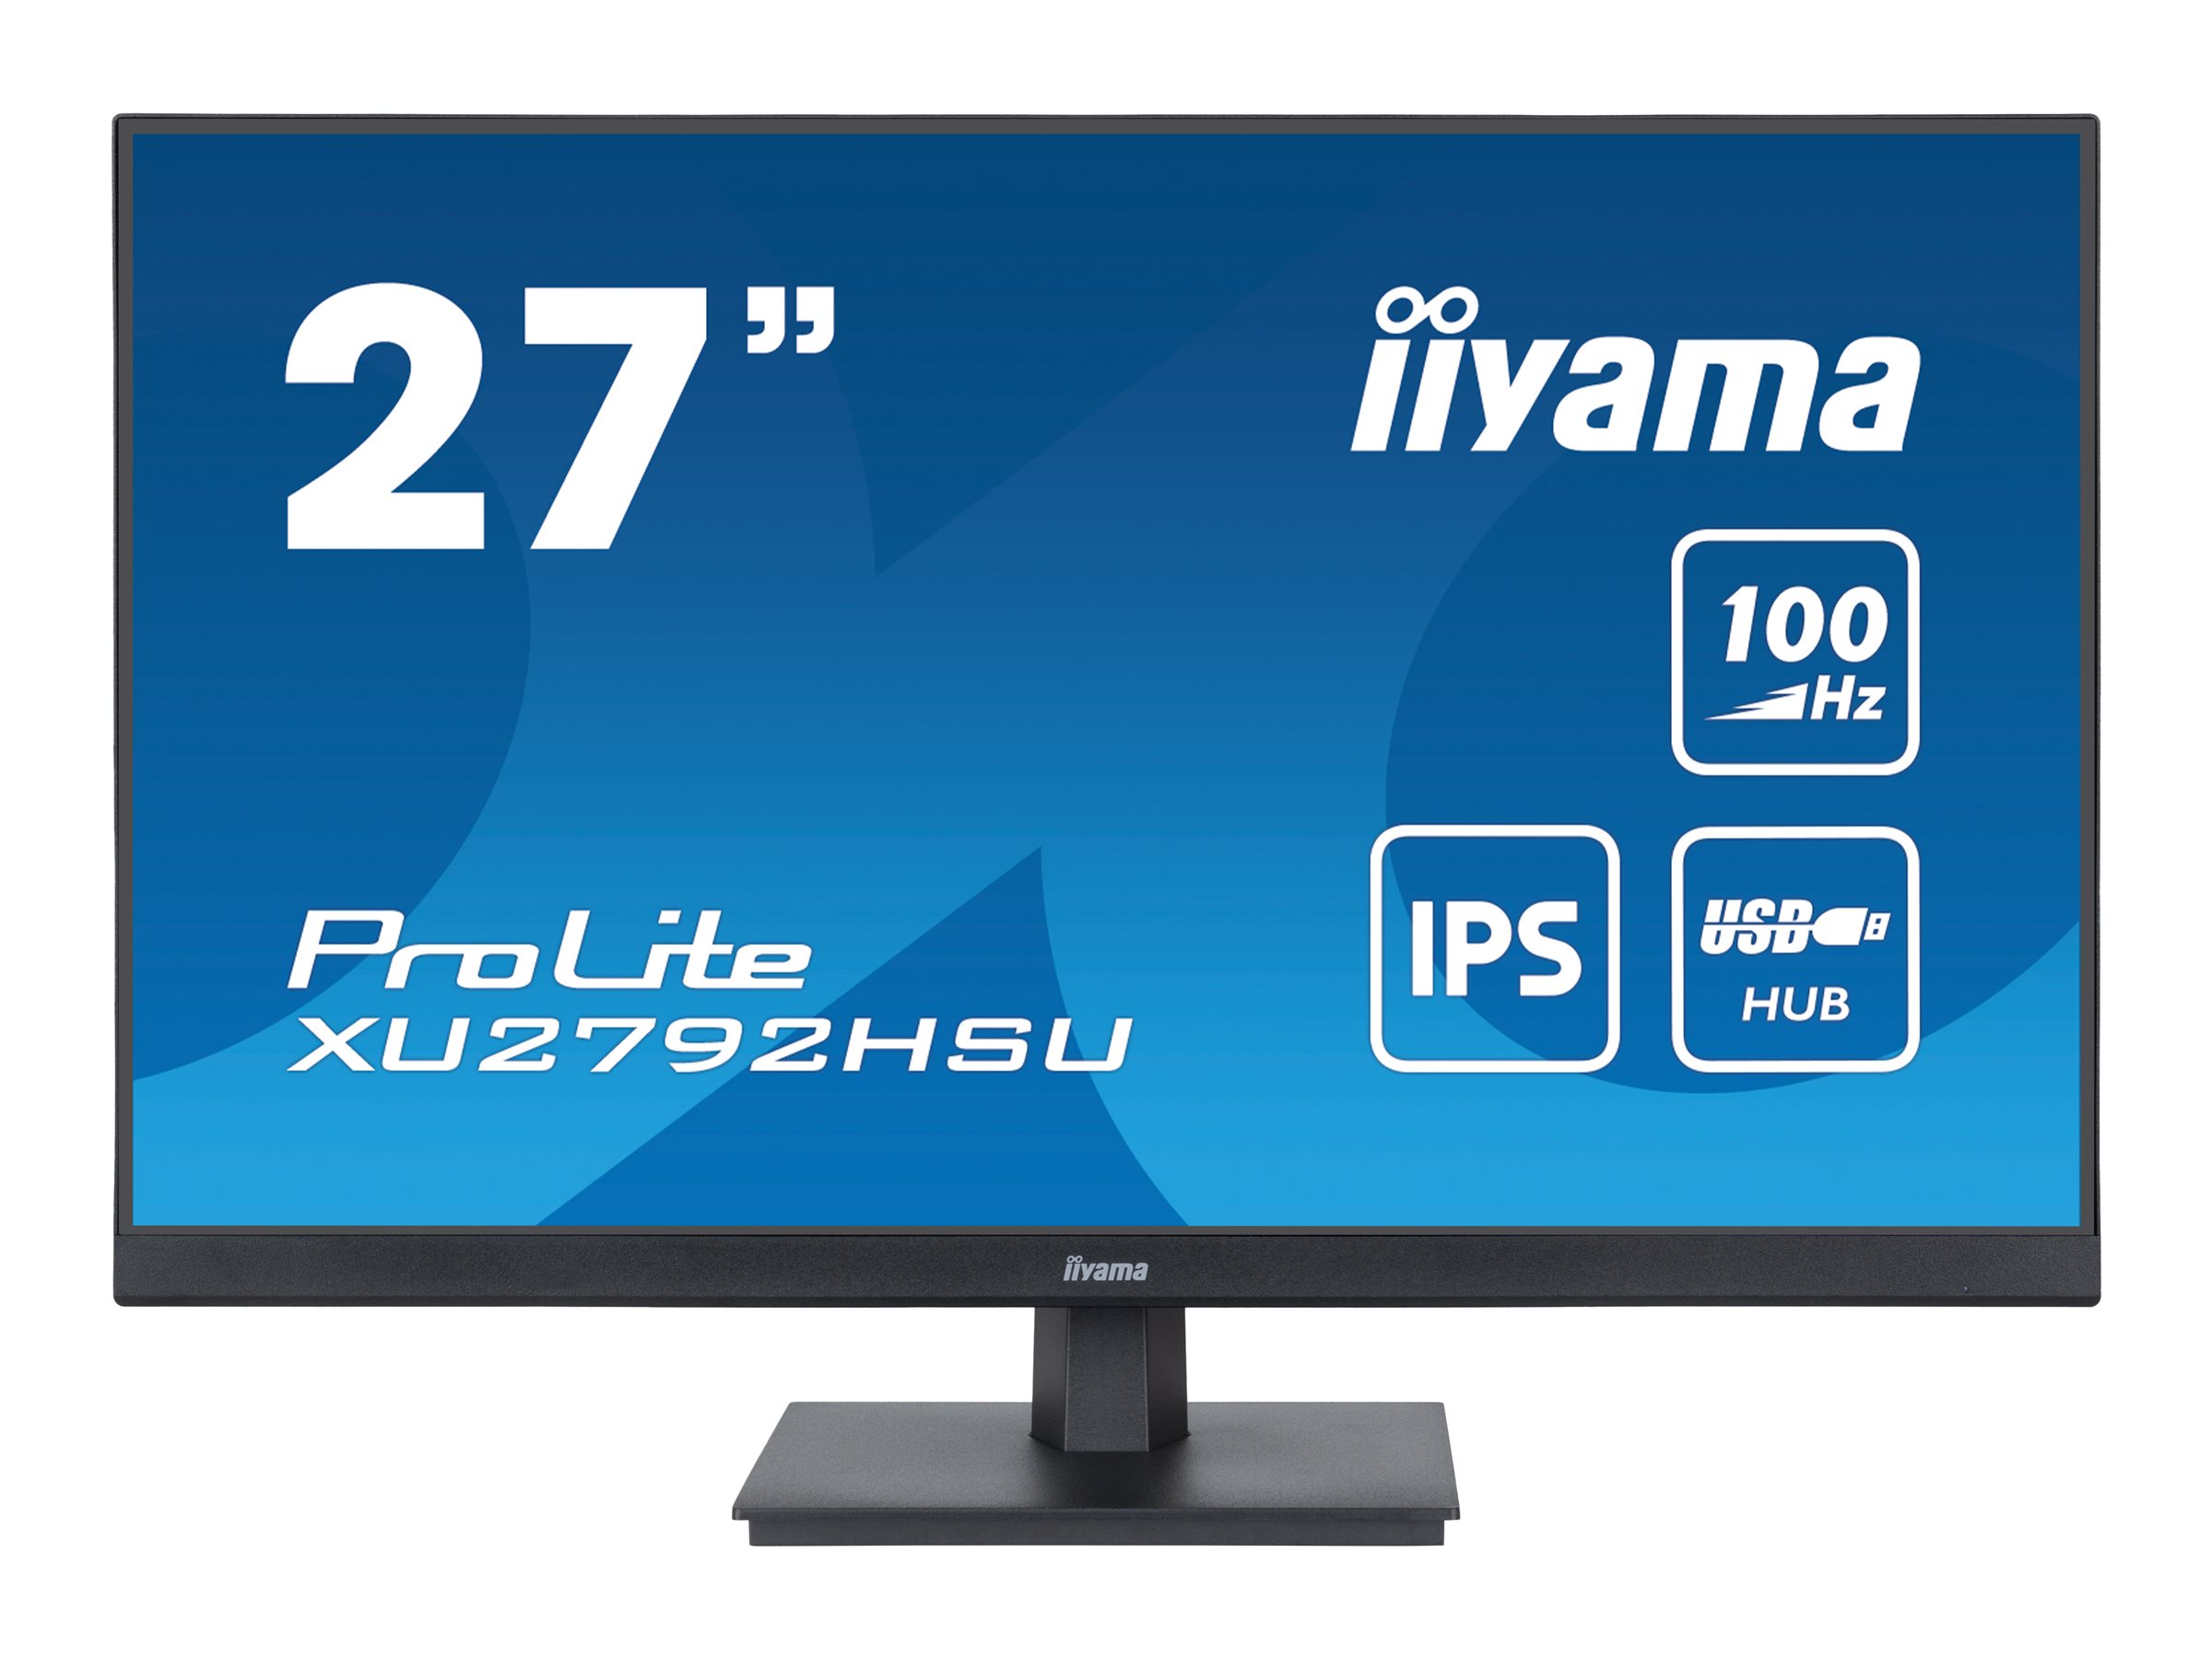 iiyama ProLite XU2792HSU-B6 - Écran LED - 27" - 1920 x 1080 Full HD (1080p) @ 100 Hz - IPS - 250 cd/m² - 1300:1 - 0.4 ms - HDMI, DisplayPort - haut-parleurs - noir mat - XU2792HSU-B6 - Écrans d'ordinateur